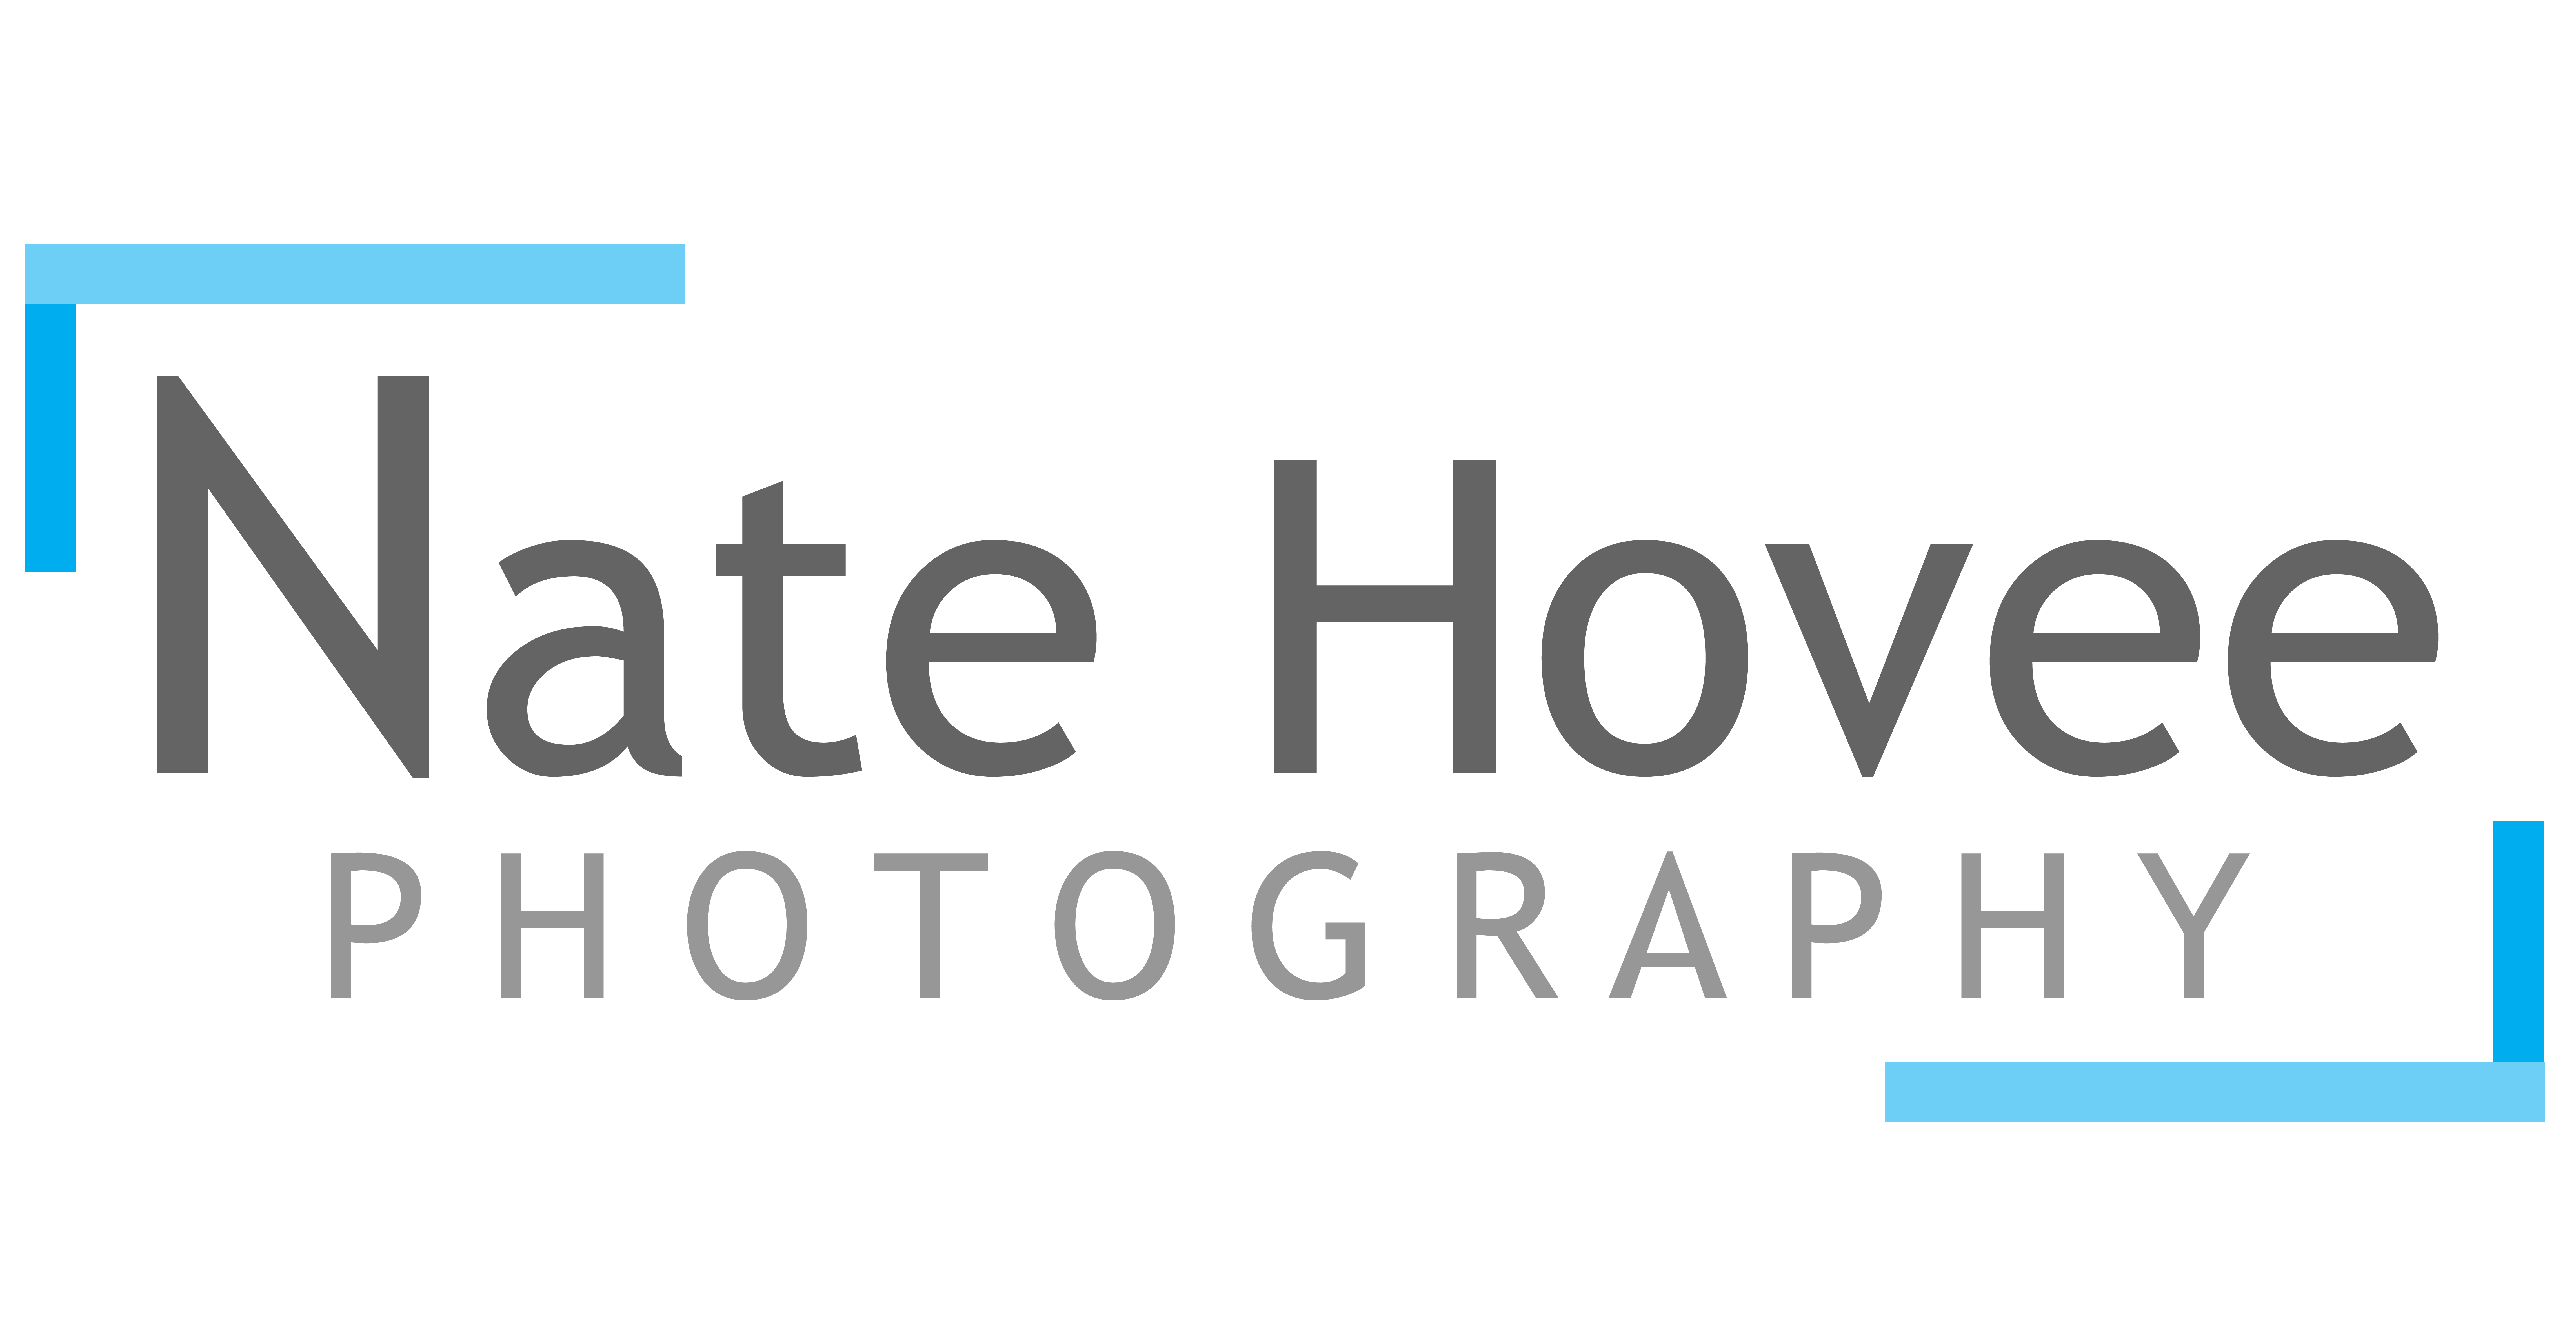 Nate Hovee - Artist Website